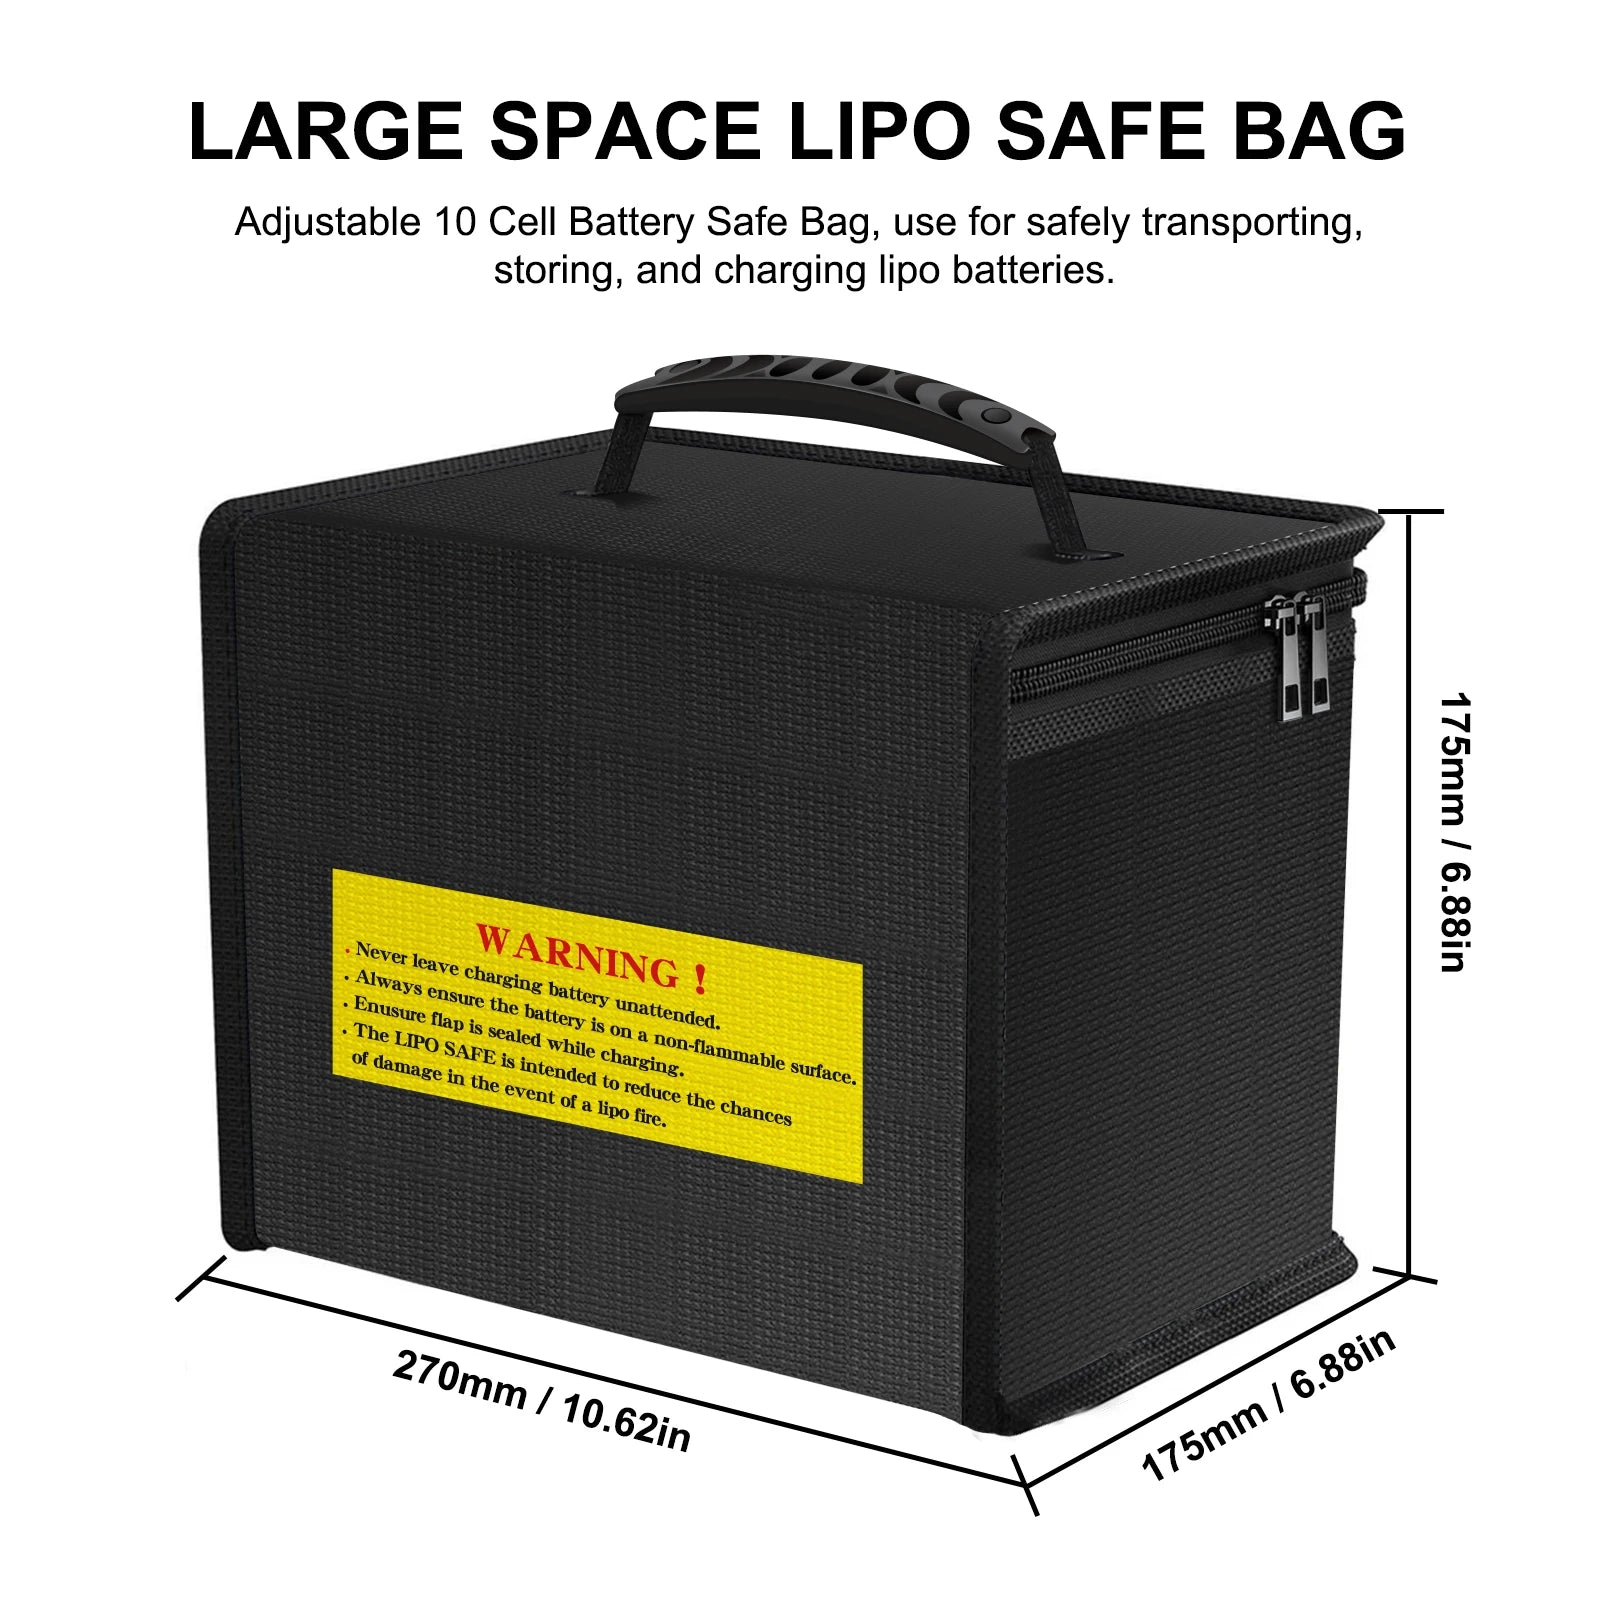 Yowoo Lipo Bag, LARGE SPACE LIPO SAFE BAG Adjustable 10 cell battery . lip